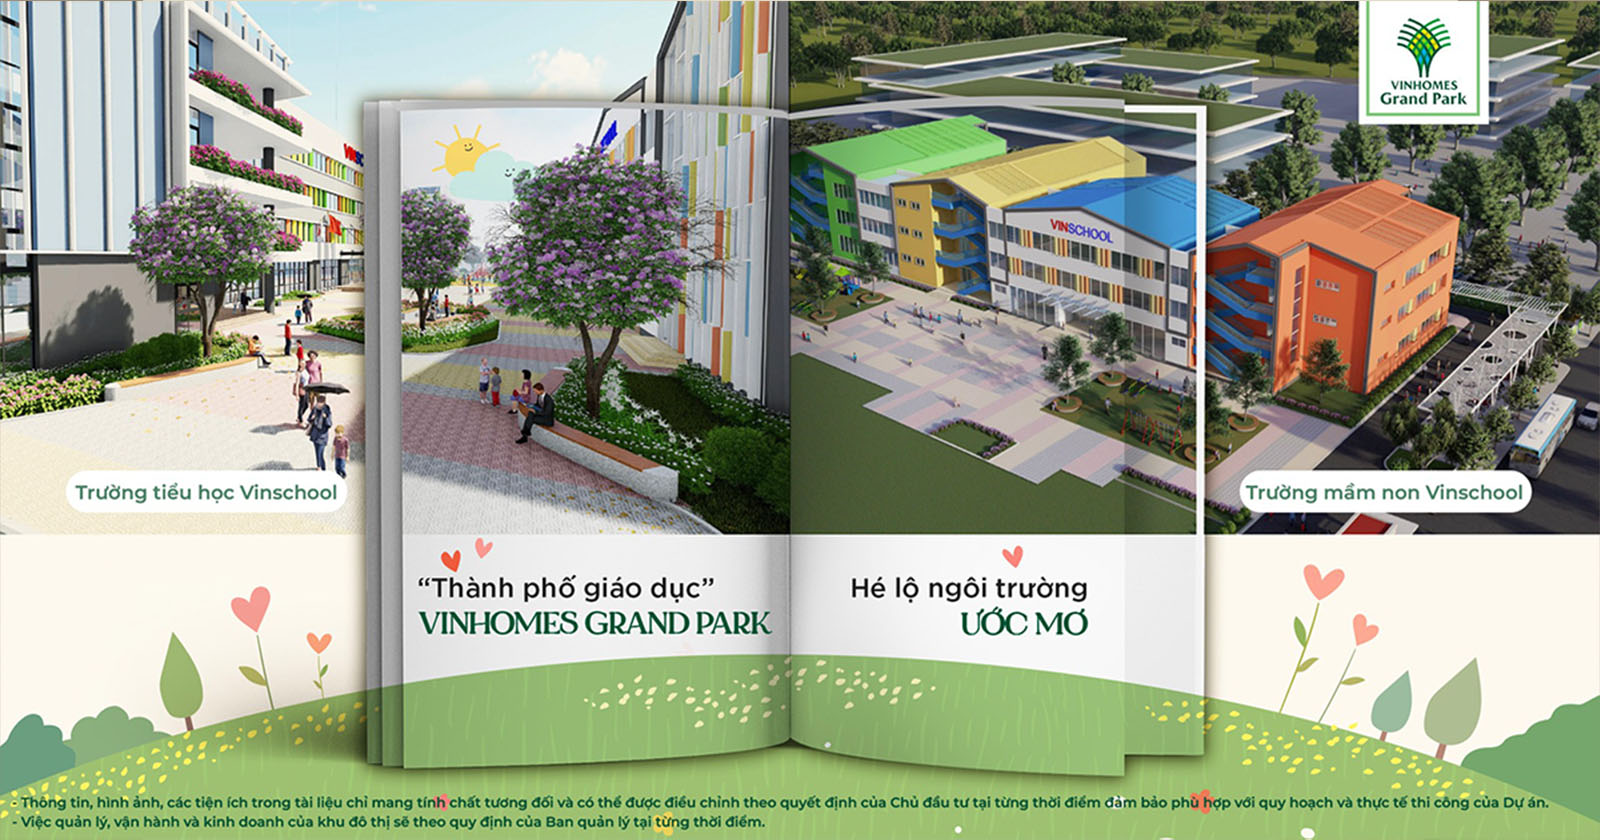 Trường học Vinschool Vinhomes Grand Park